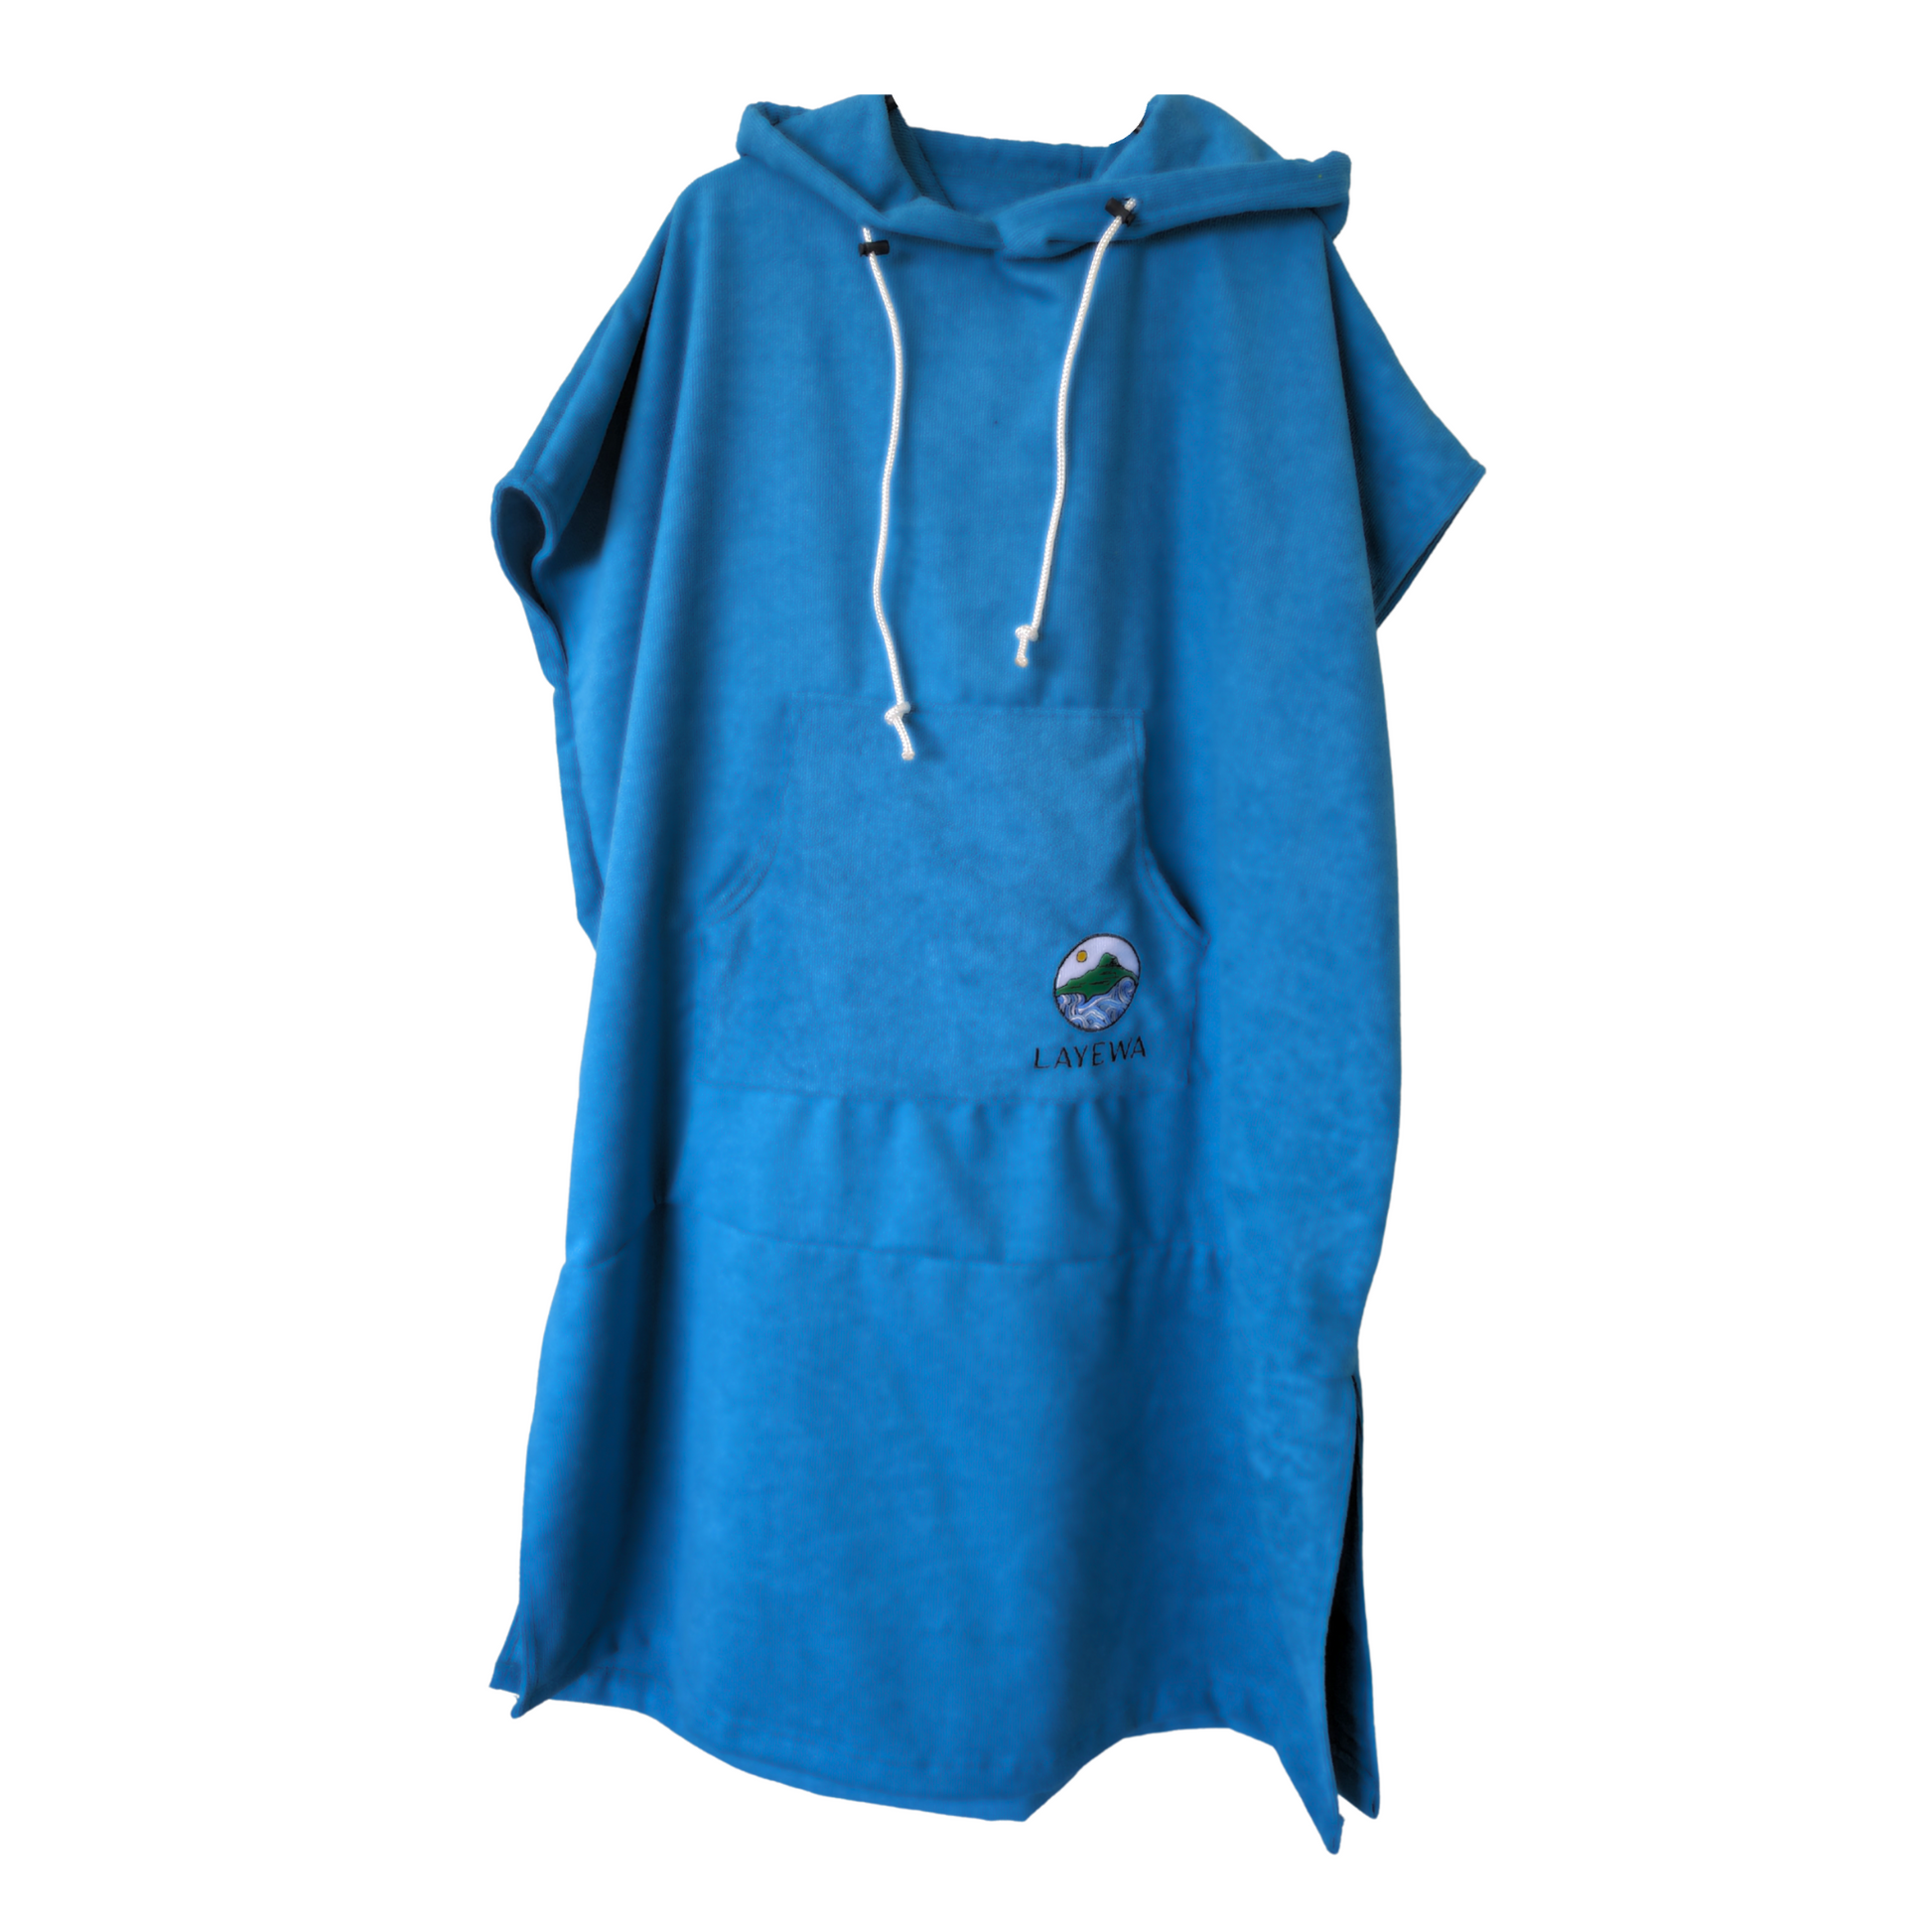 Hooded Changing Towel Poncho - Turquoise Blue - LAYEWA